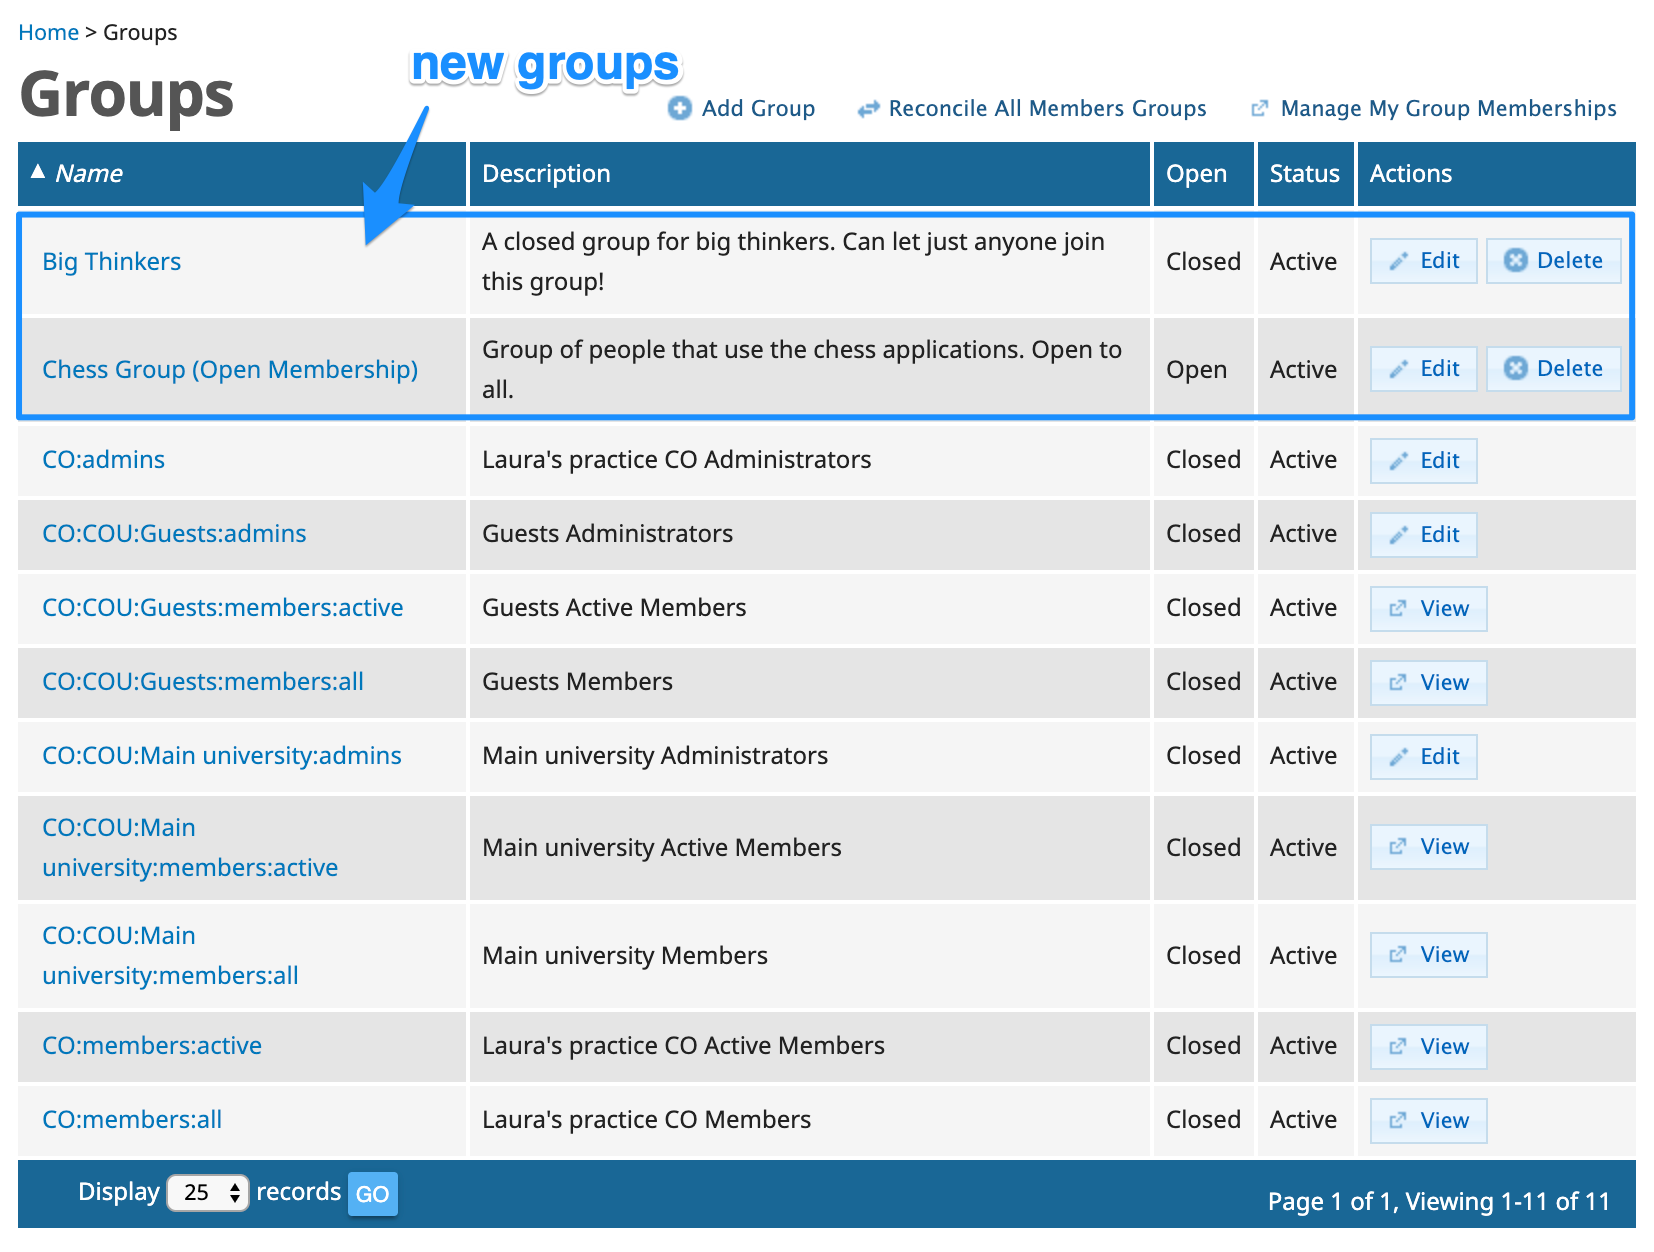 Screen shot - new groups